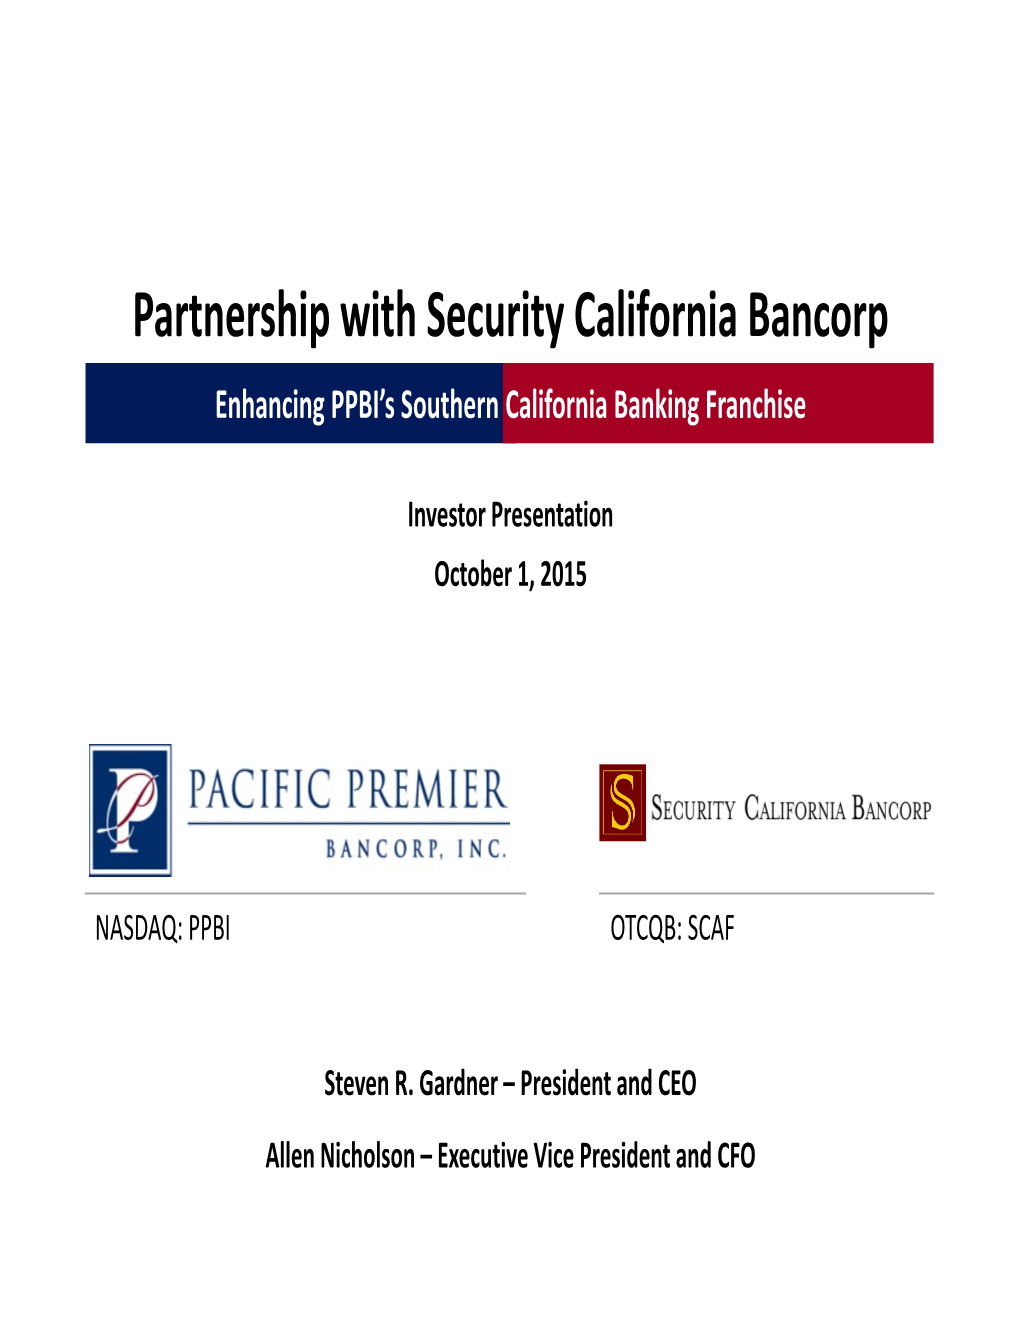 Pacific Premier Bancorp Merger Presentation